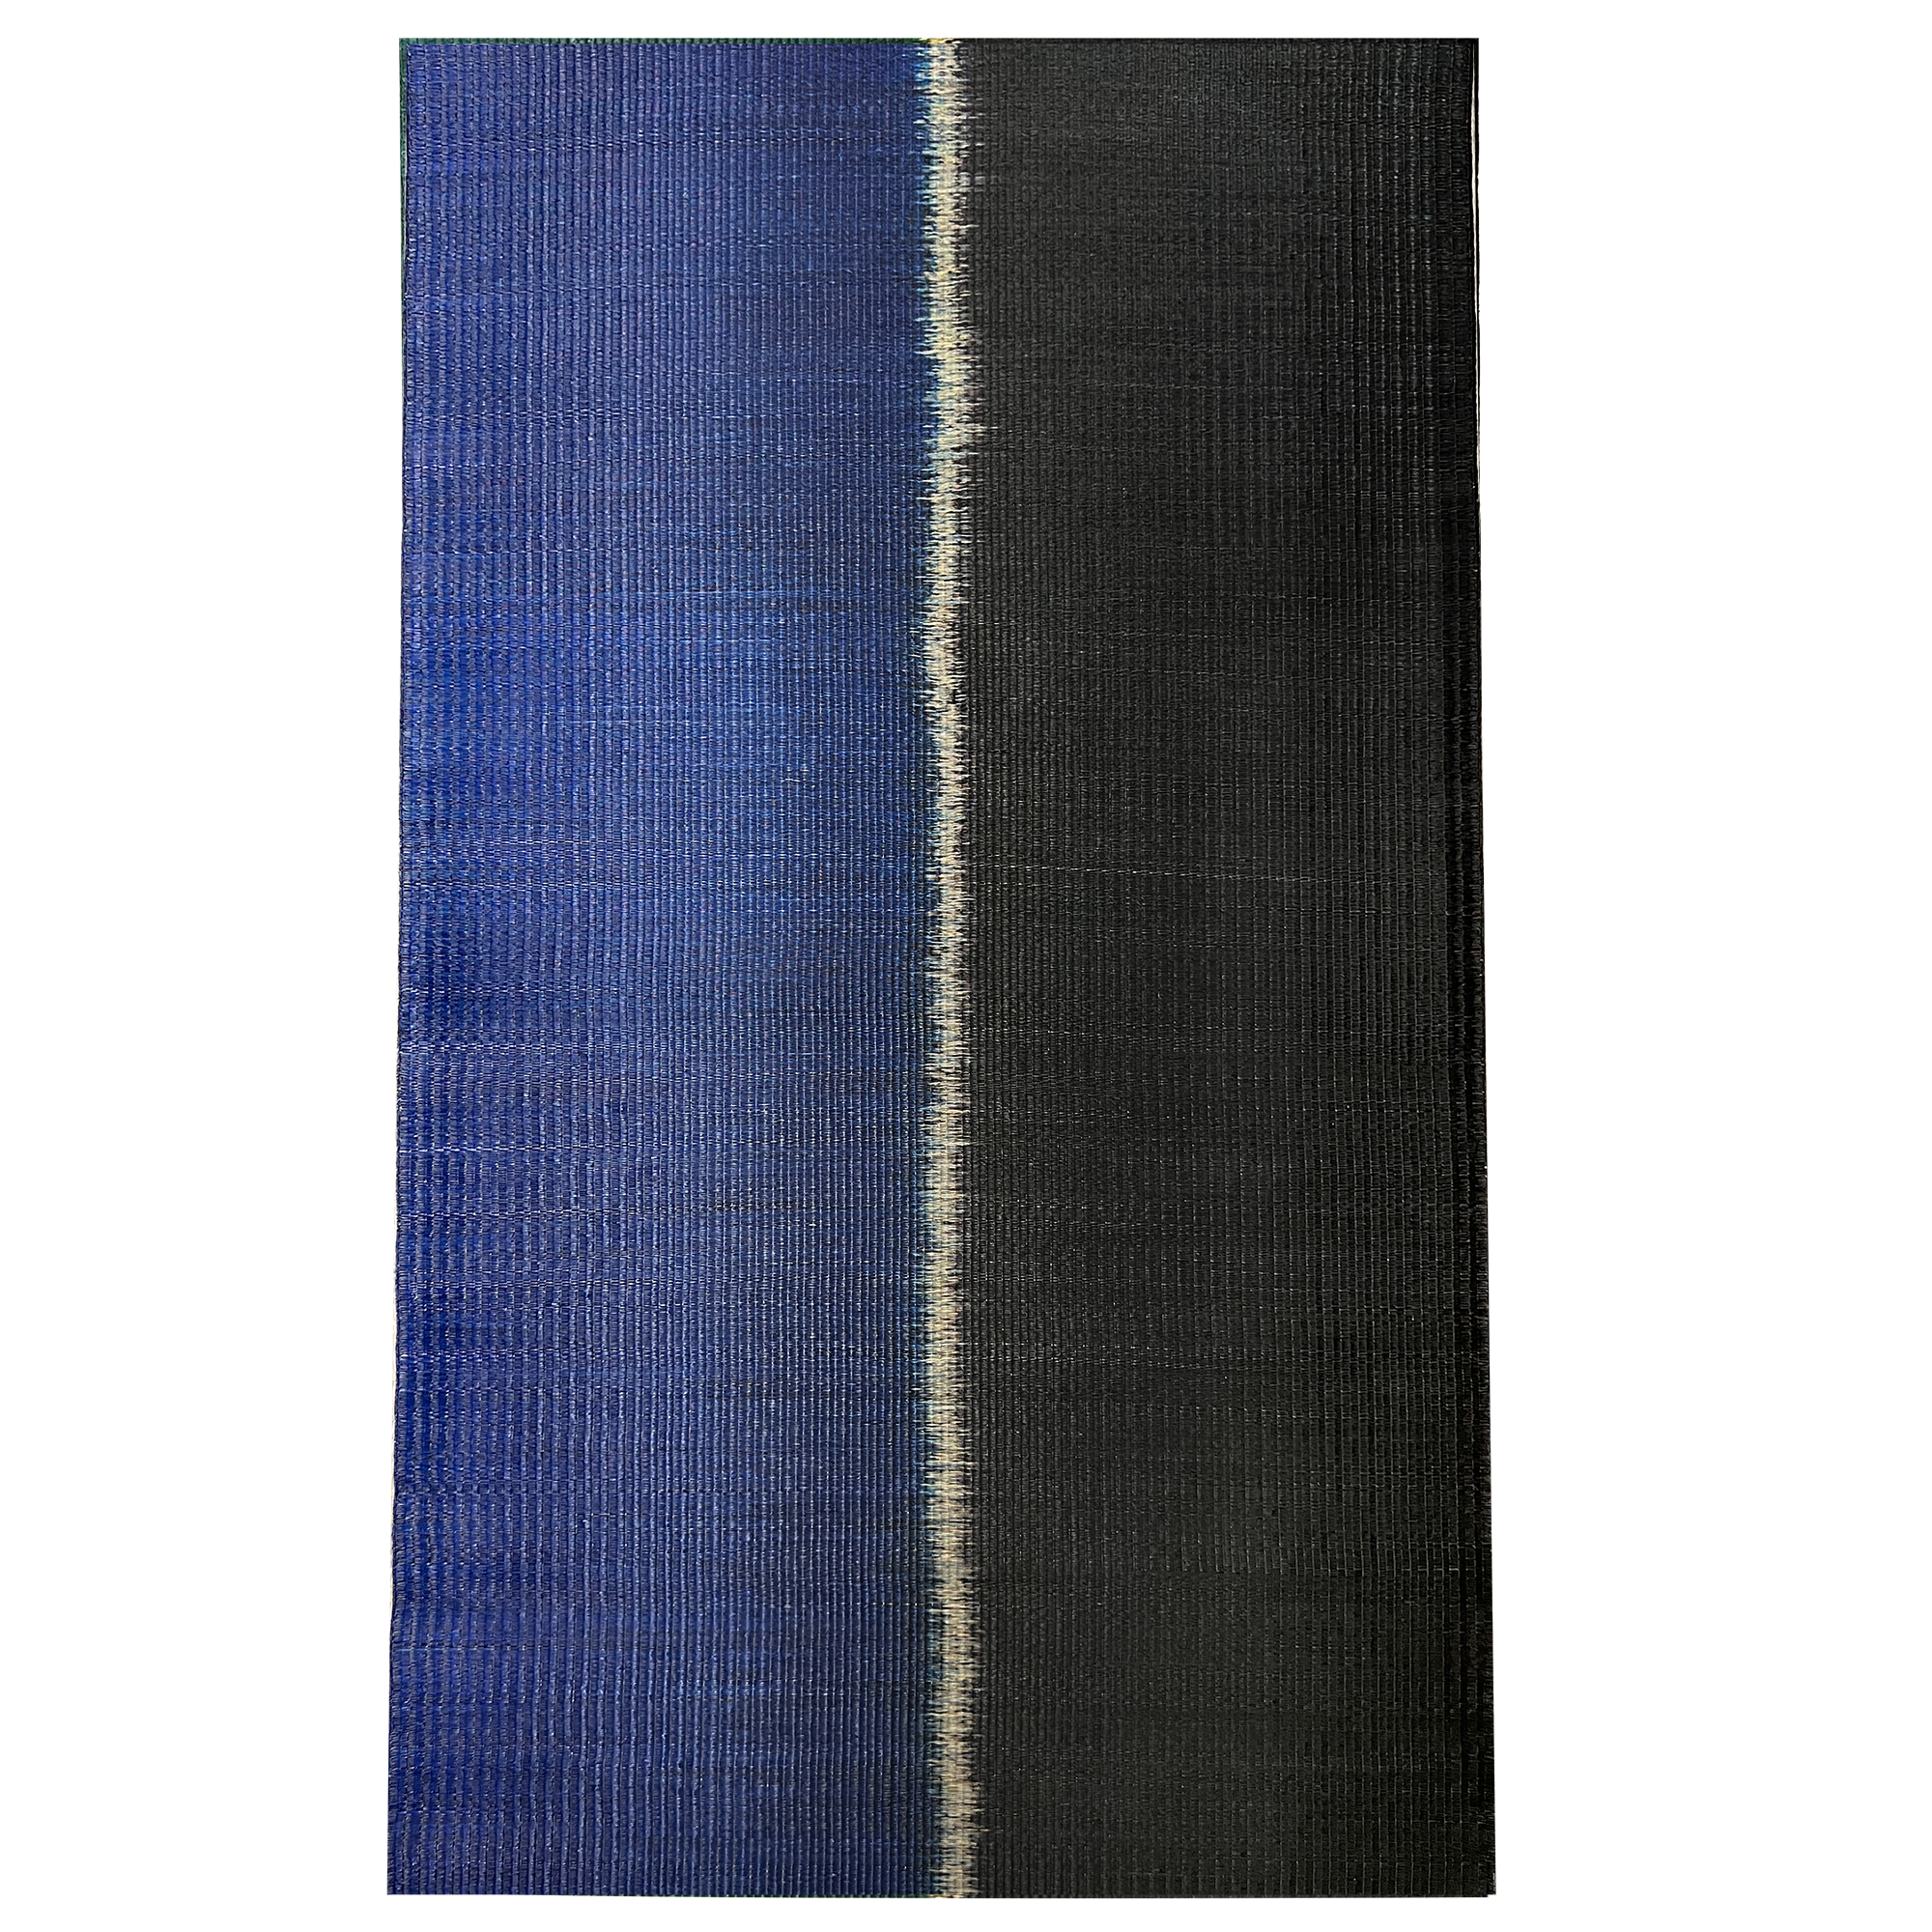 Harmonious black&blue mat